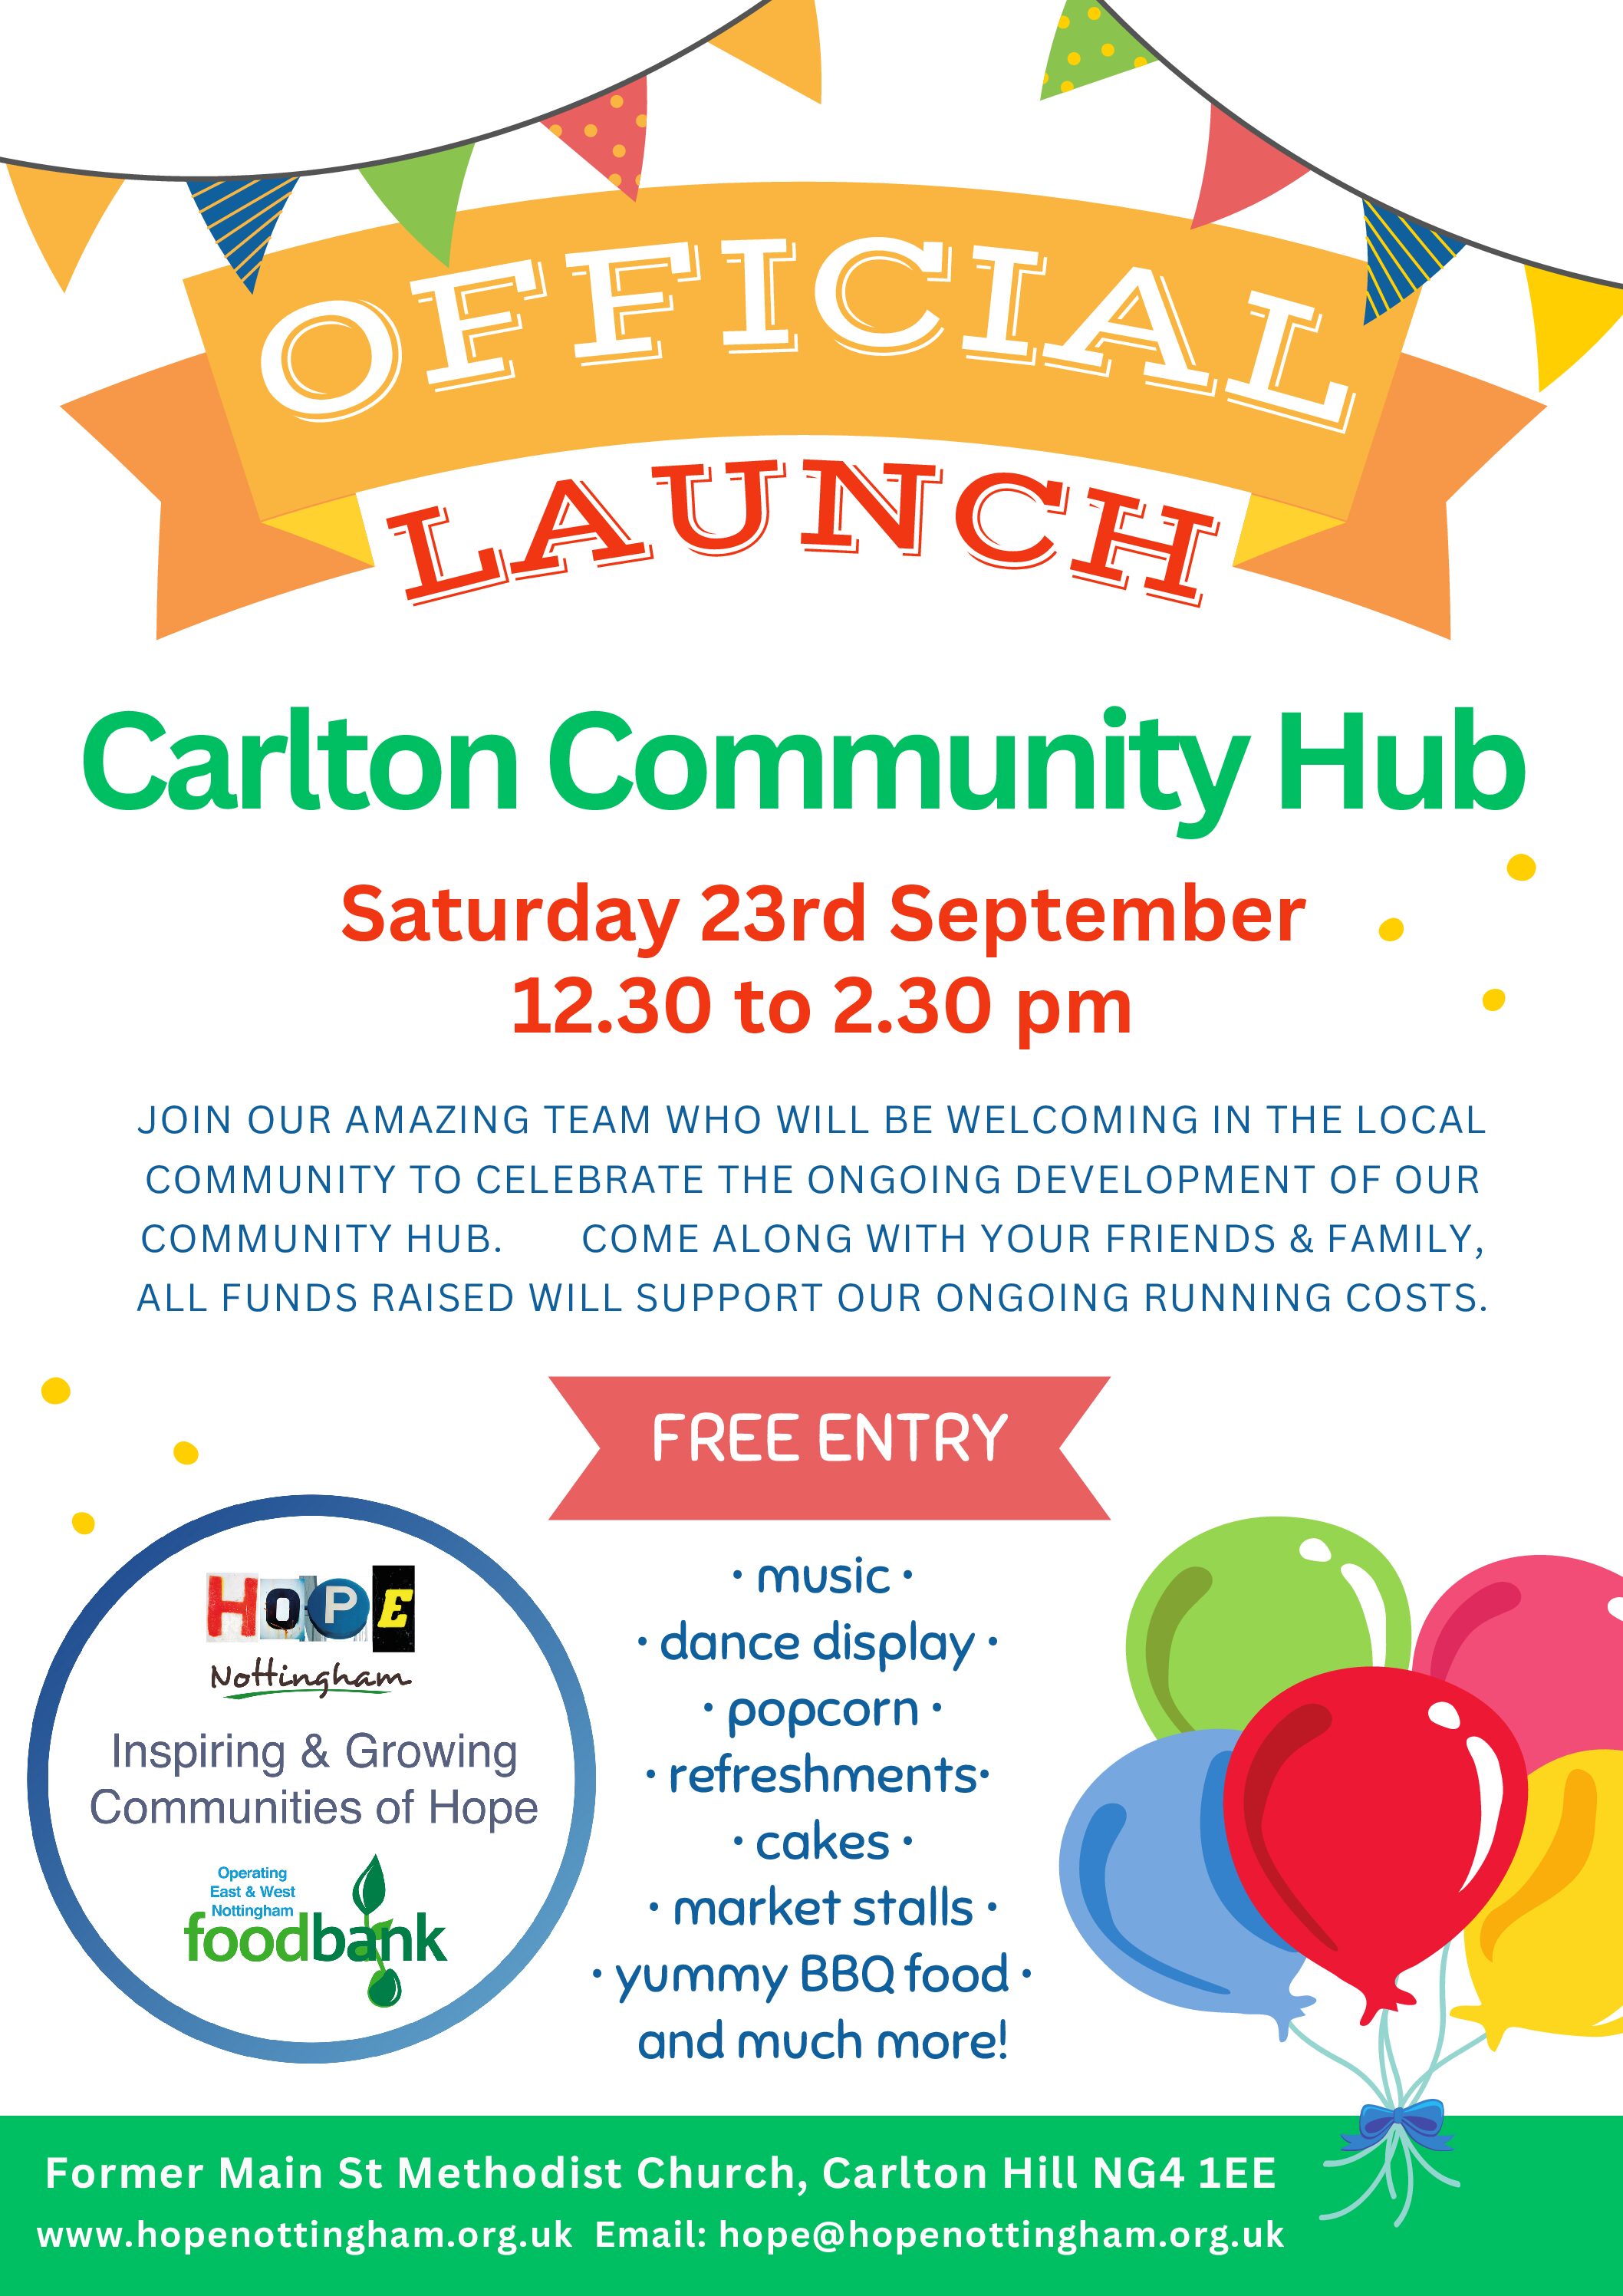 Hope Nottingham – Carlton Community Hub Launch